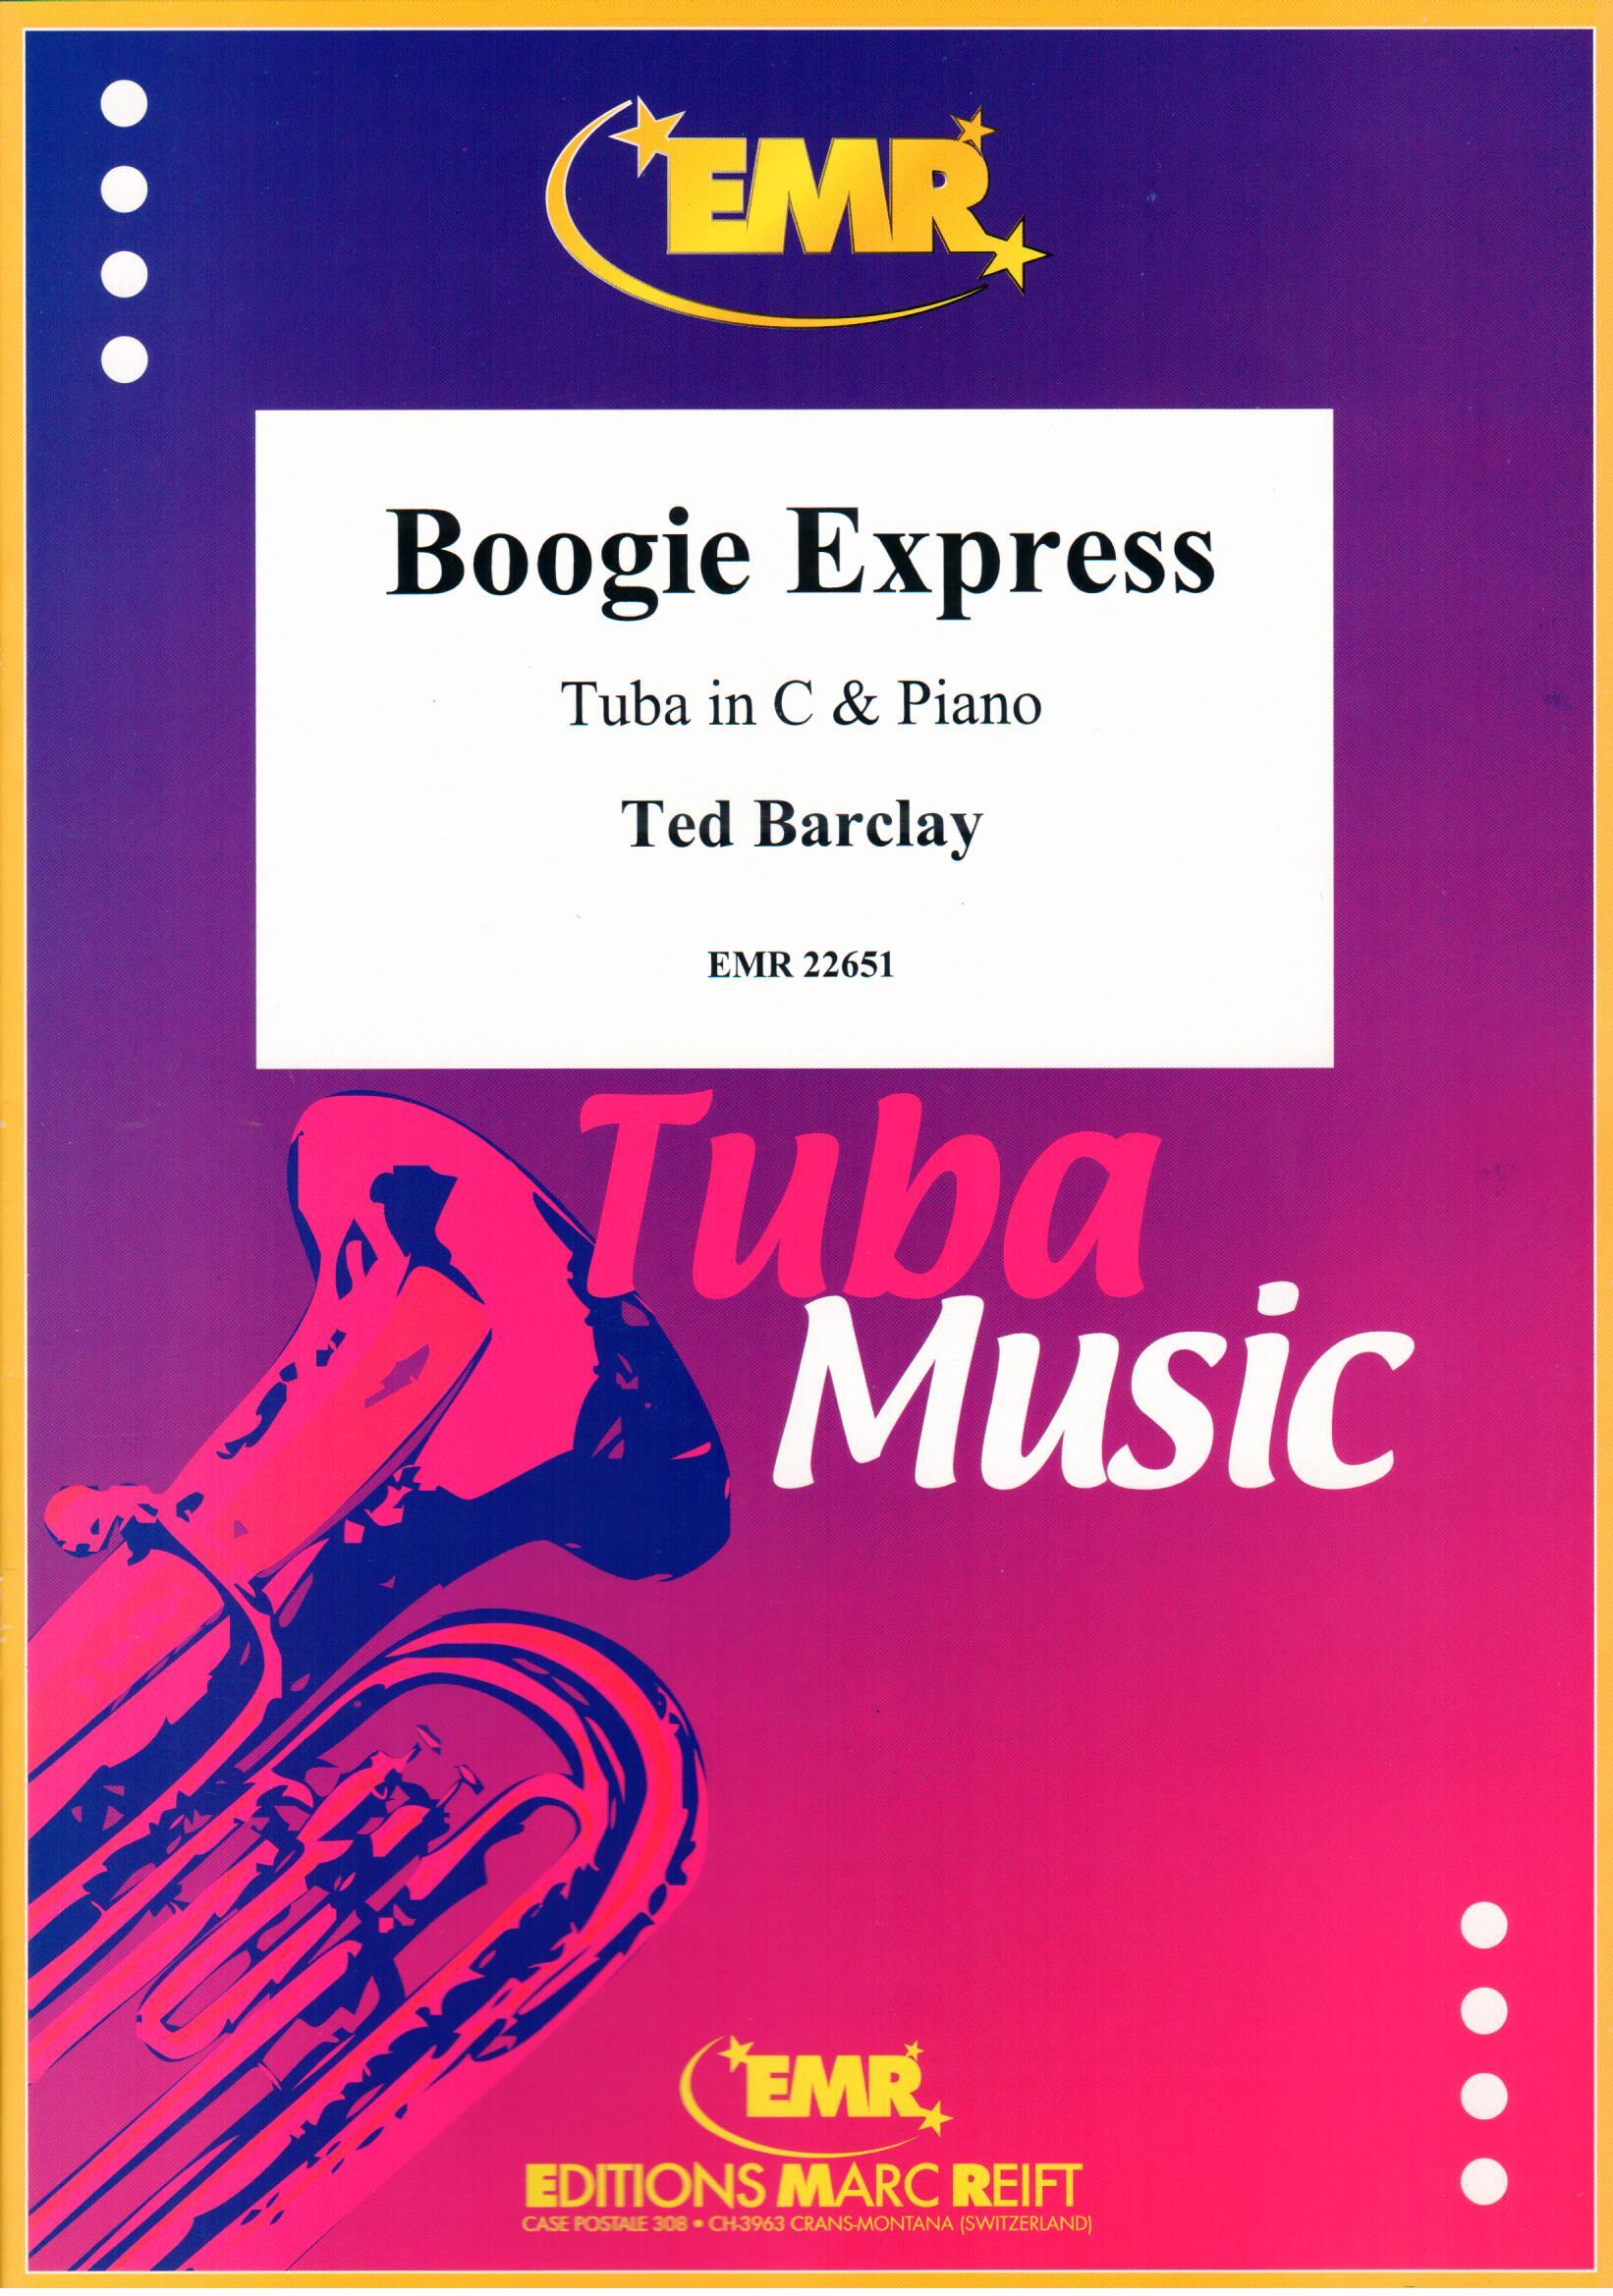 BOOGIE EXPRESS, SOLOS - E♭. Bass